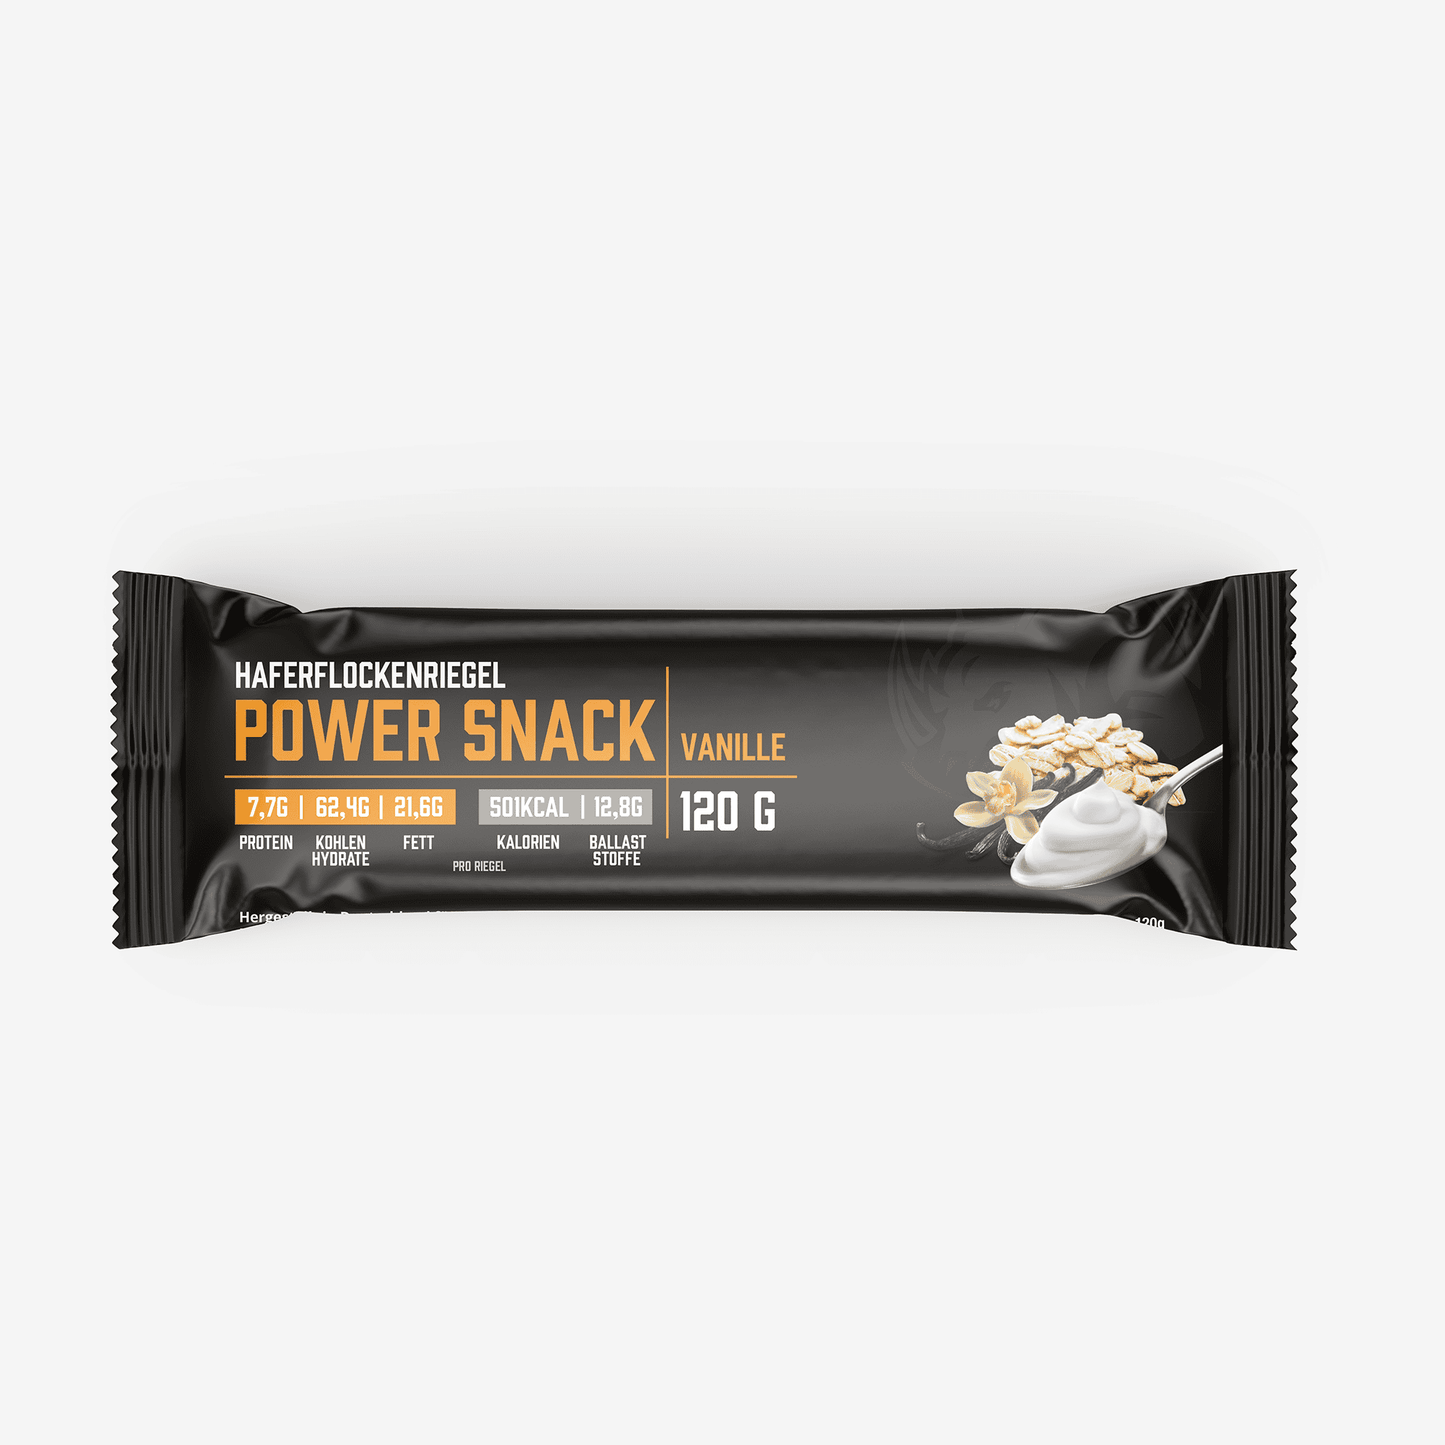 Power Snack (12 bars)